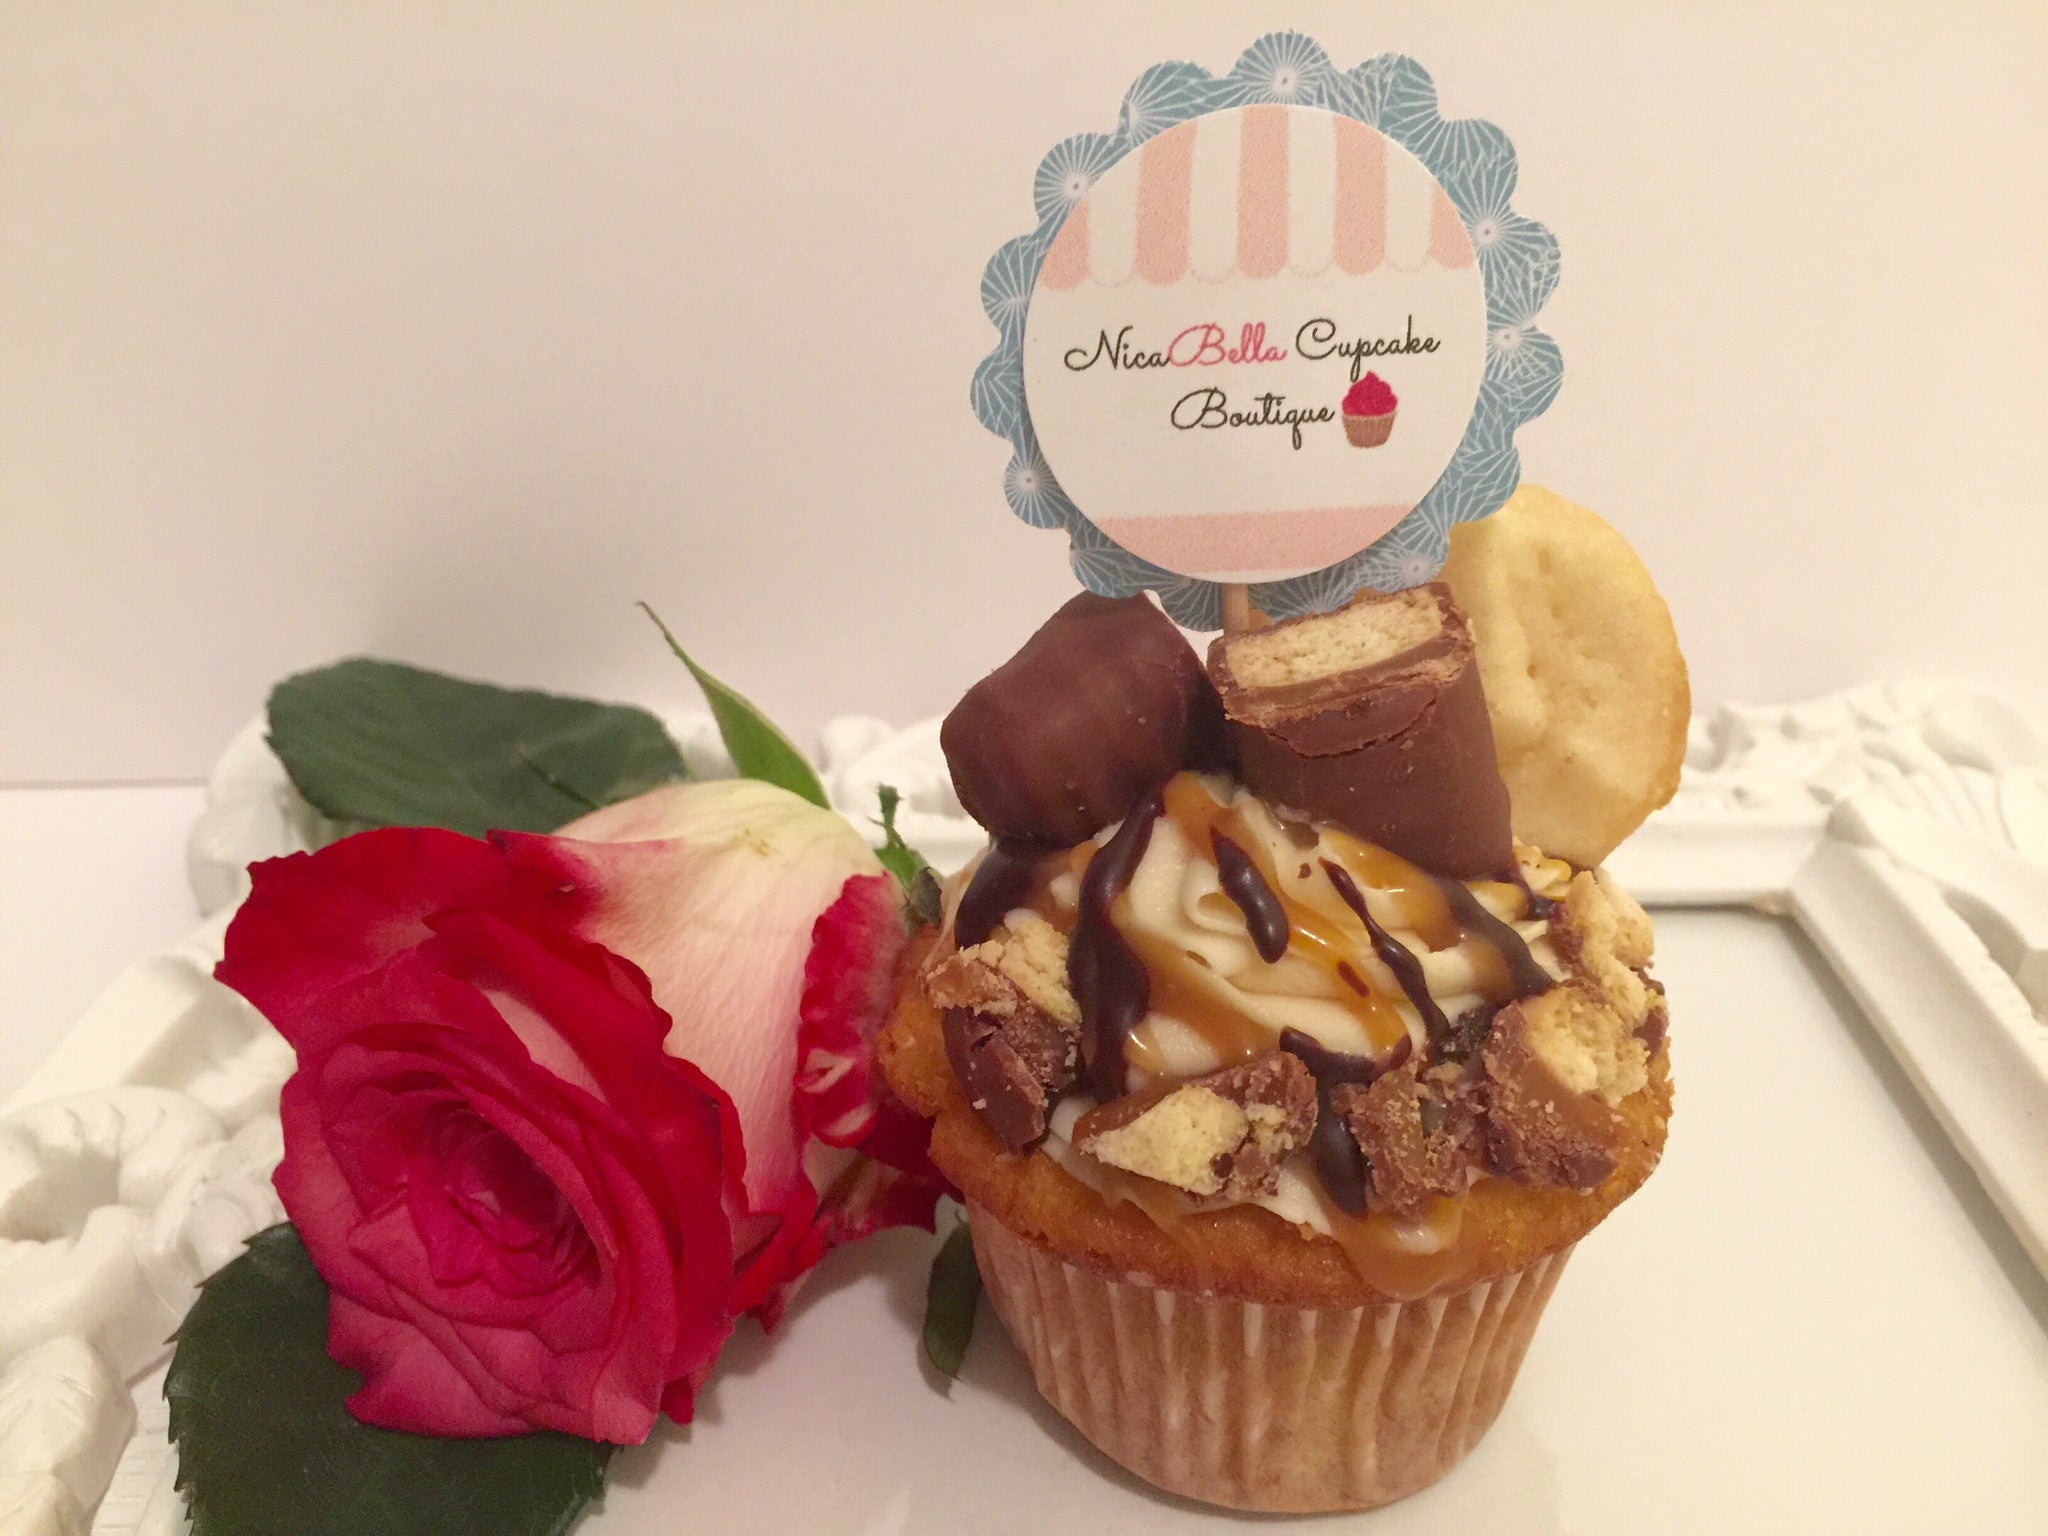 Twix inspired Cupcake - NicaBella Cupcake Boutique